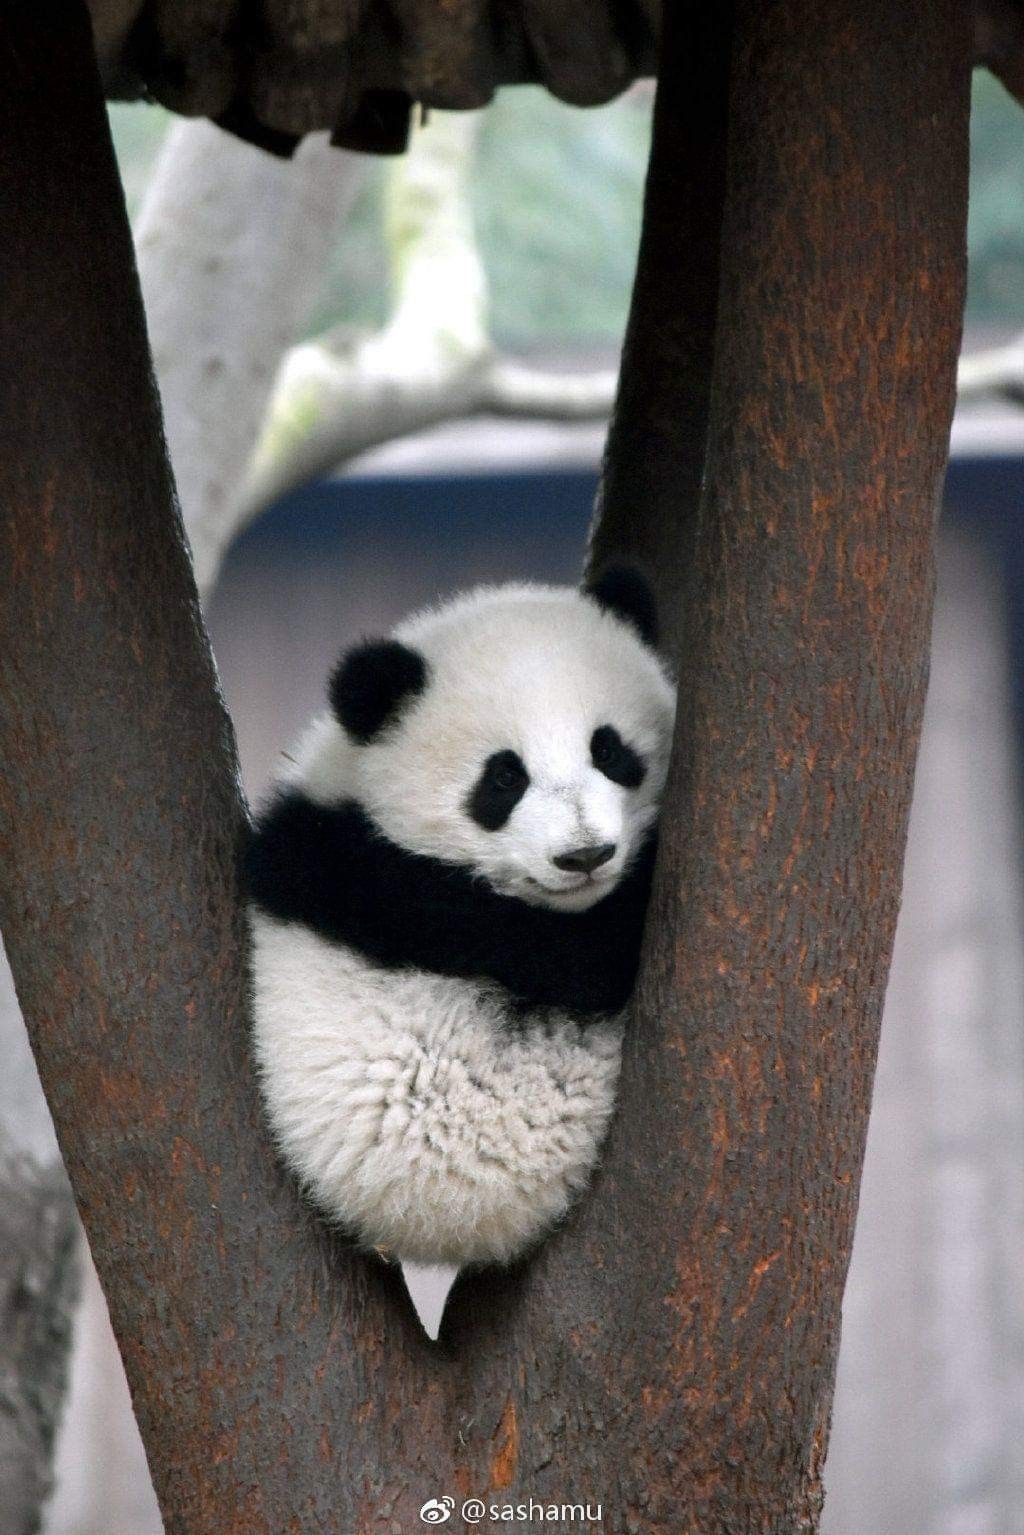 Funny Panda Picture ideas. panda, funny panda picture, panda bear